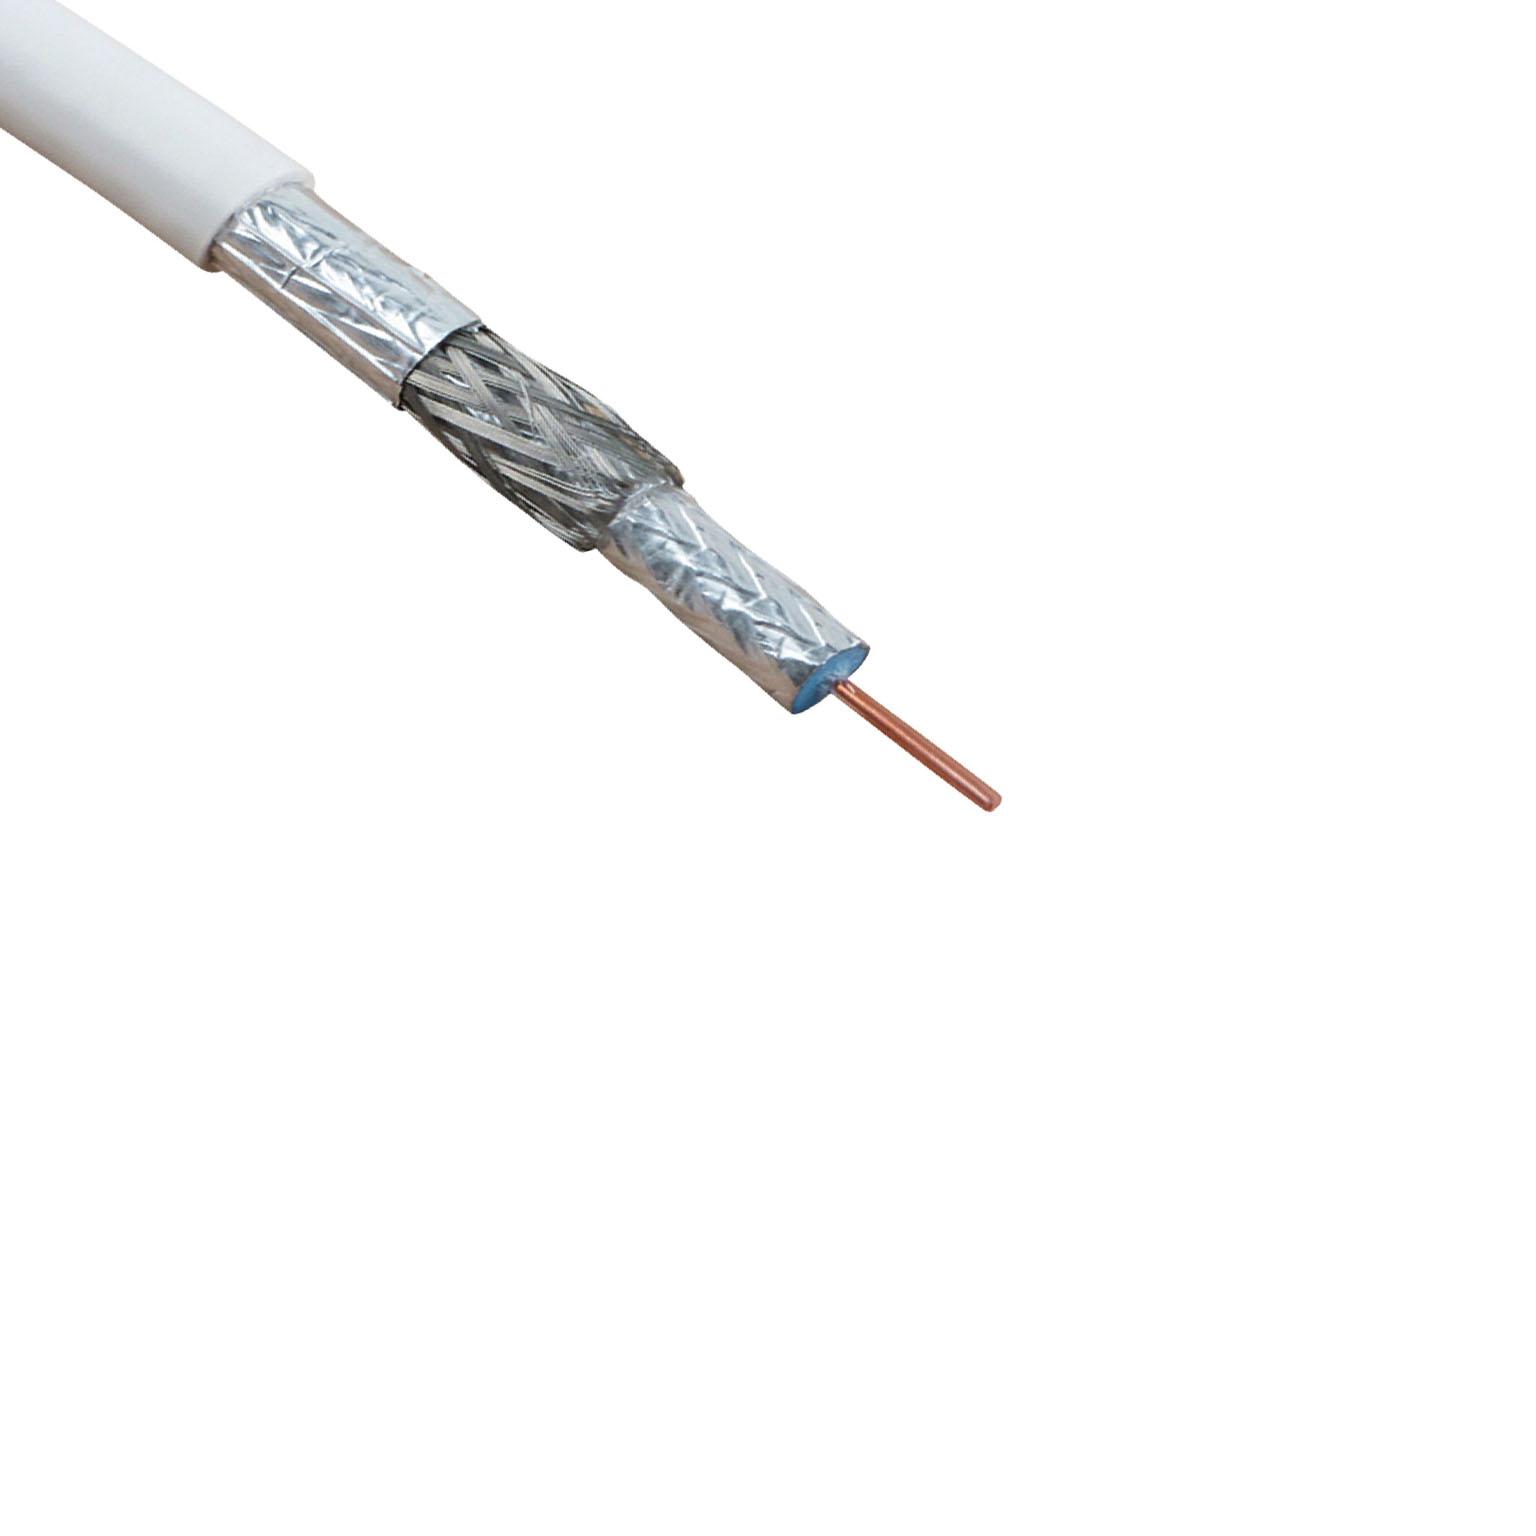 Hirschmann - KOKA 9 TS - Coax kabel per meter - Wit